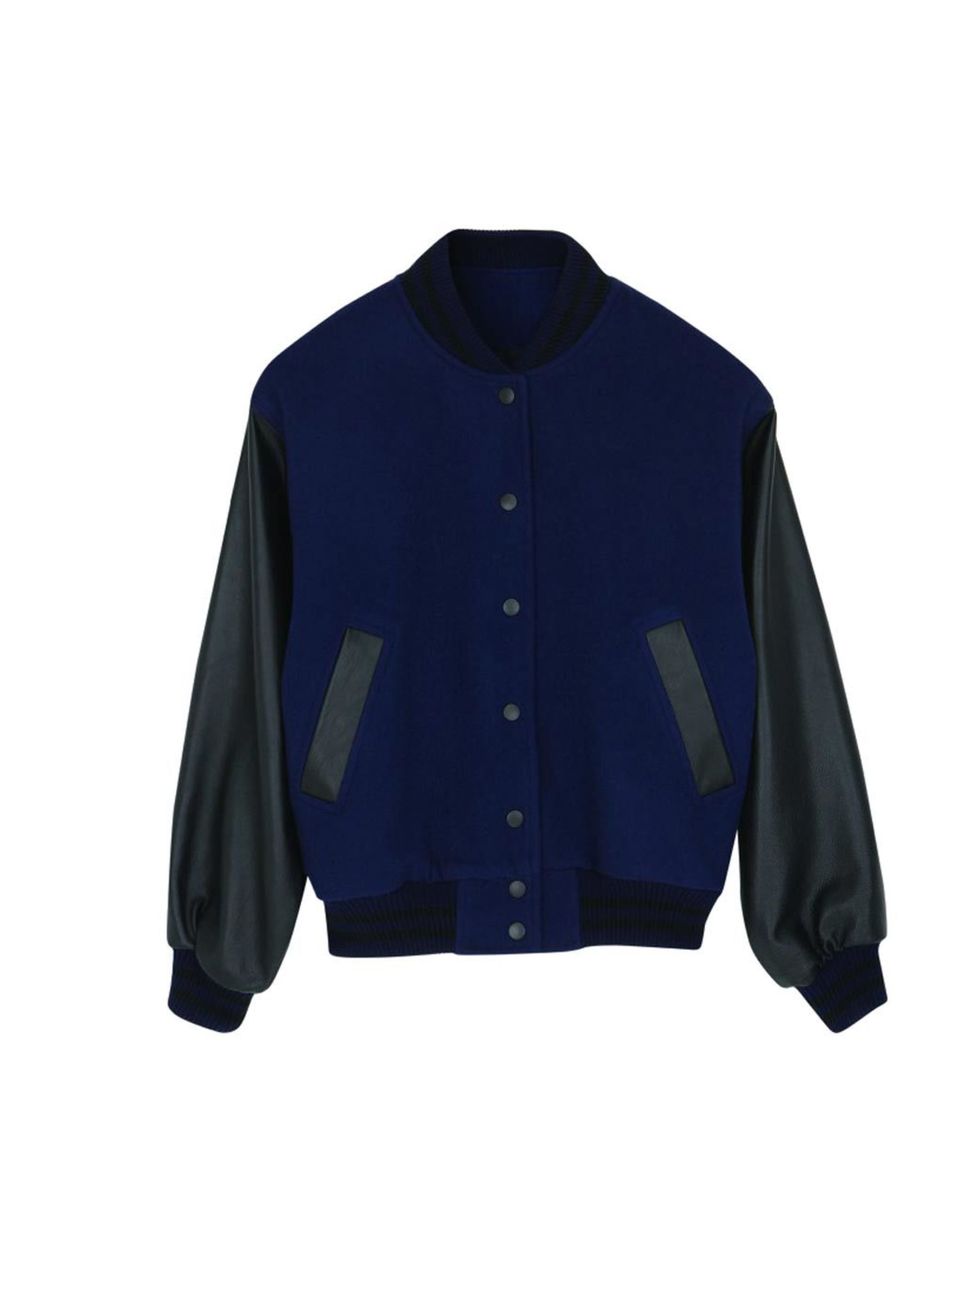 <p>J W Anderson X Topshop - Blue American Football Jacket - £129.99</p>